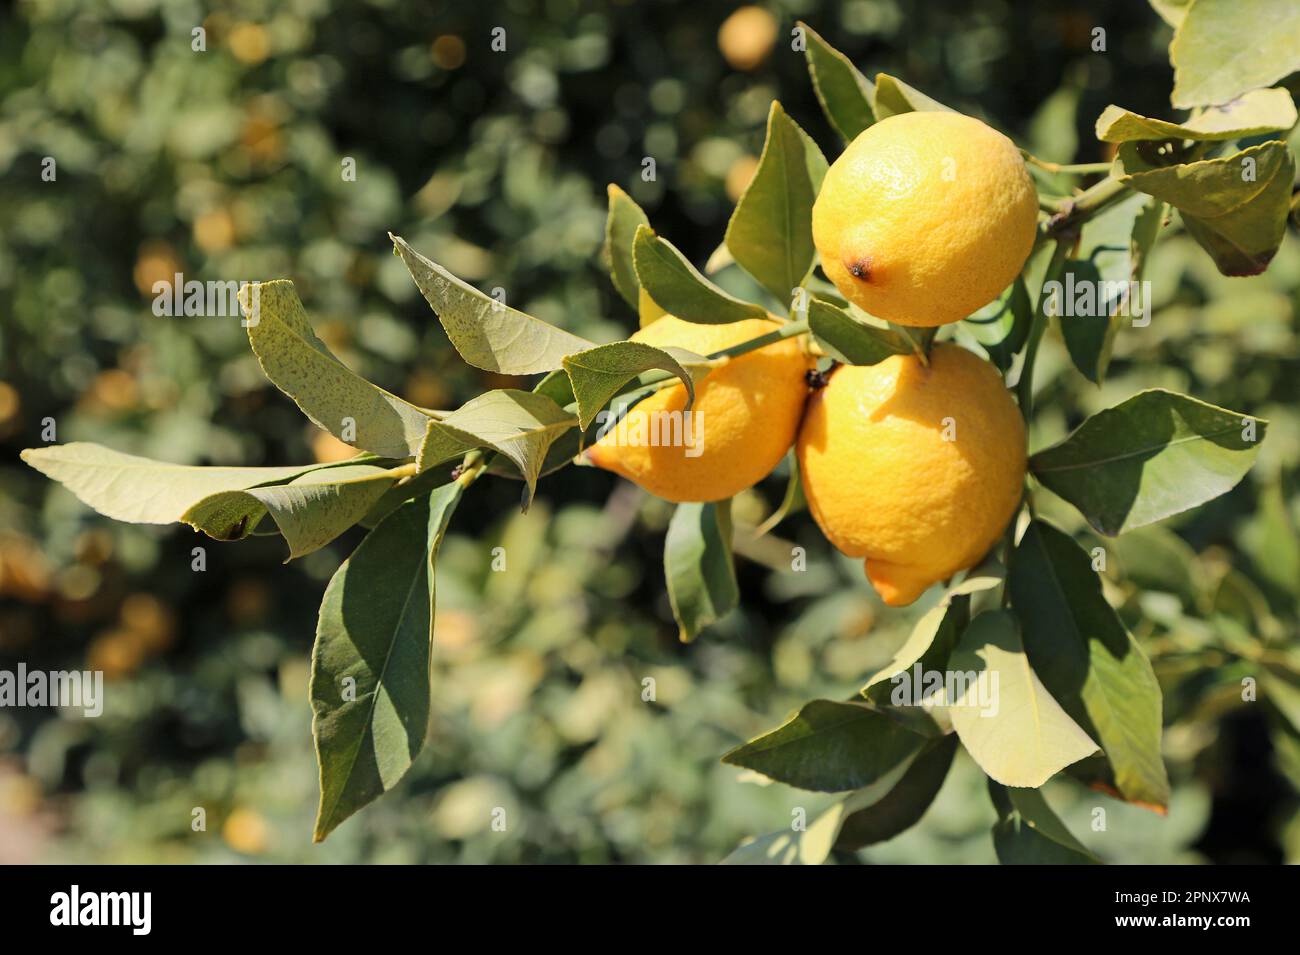 Three lemon on the branch - California Stock Photo